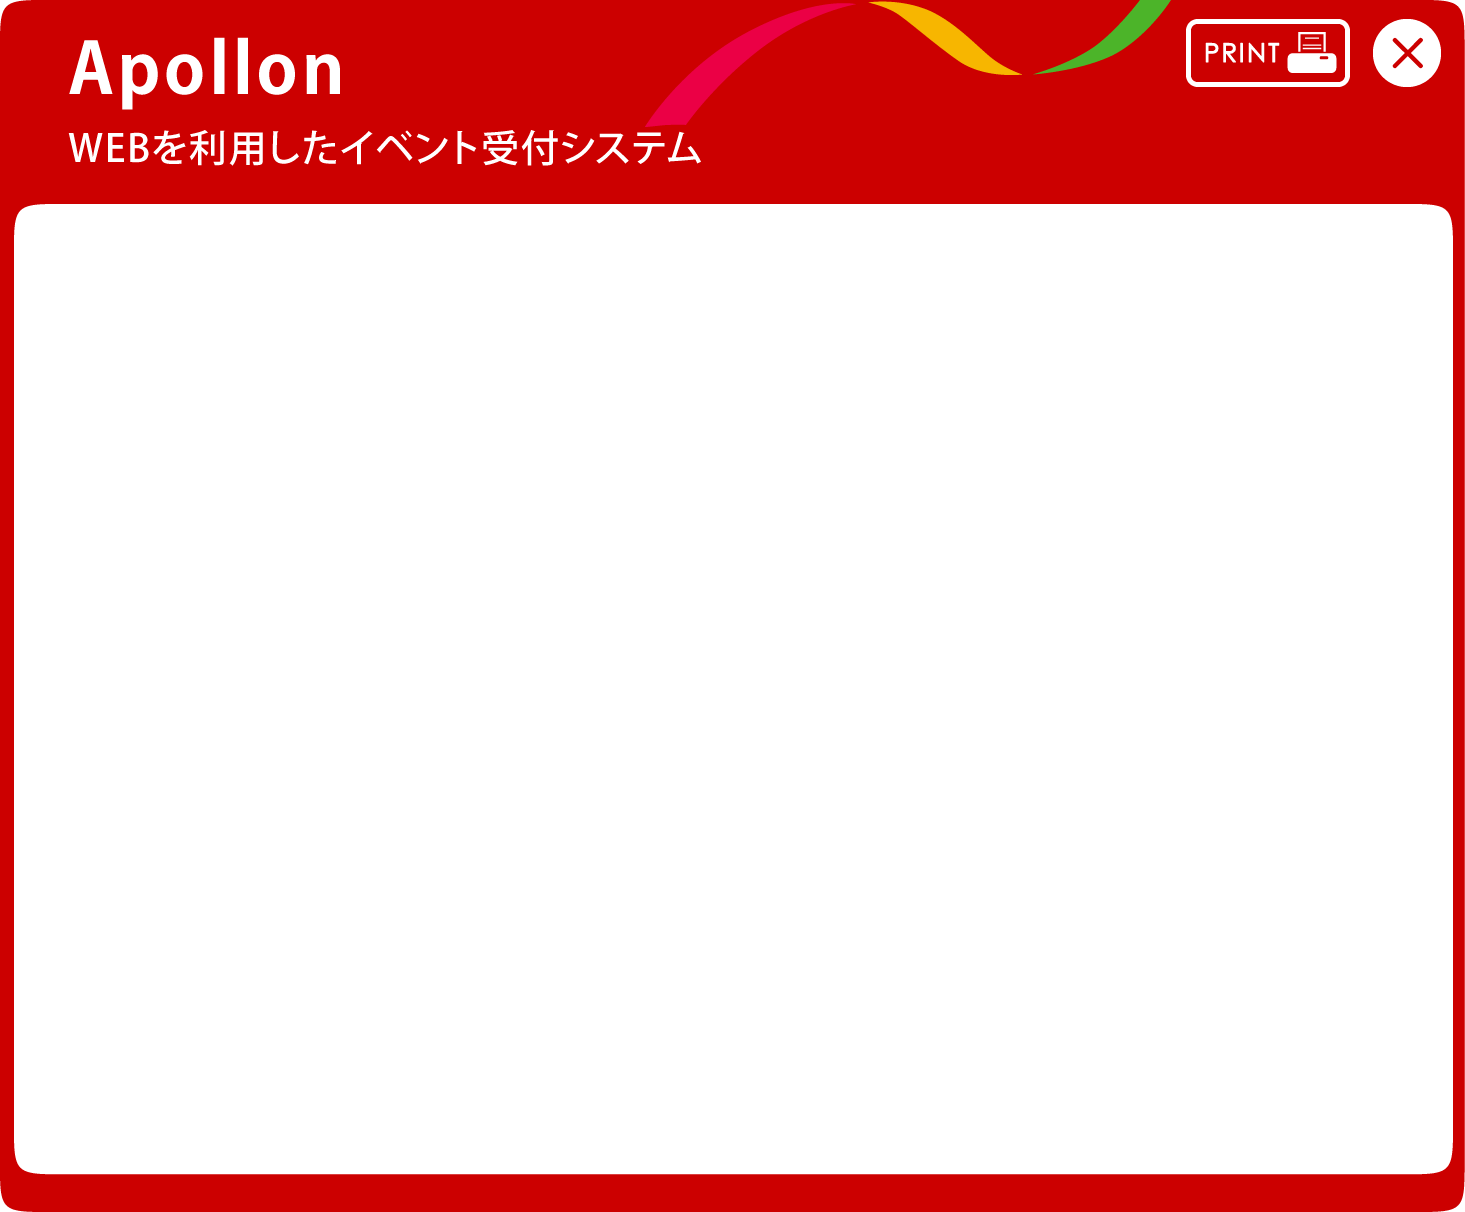 Apollon WEBを利用したイベント受付システム